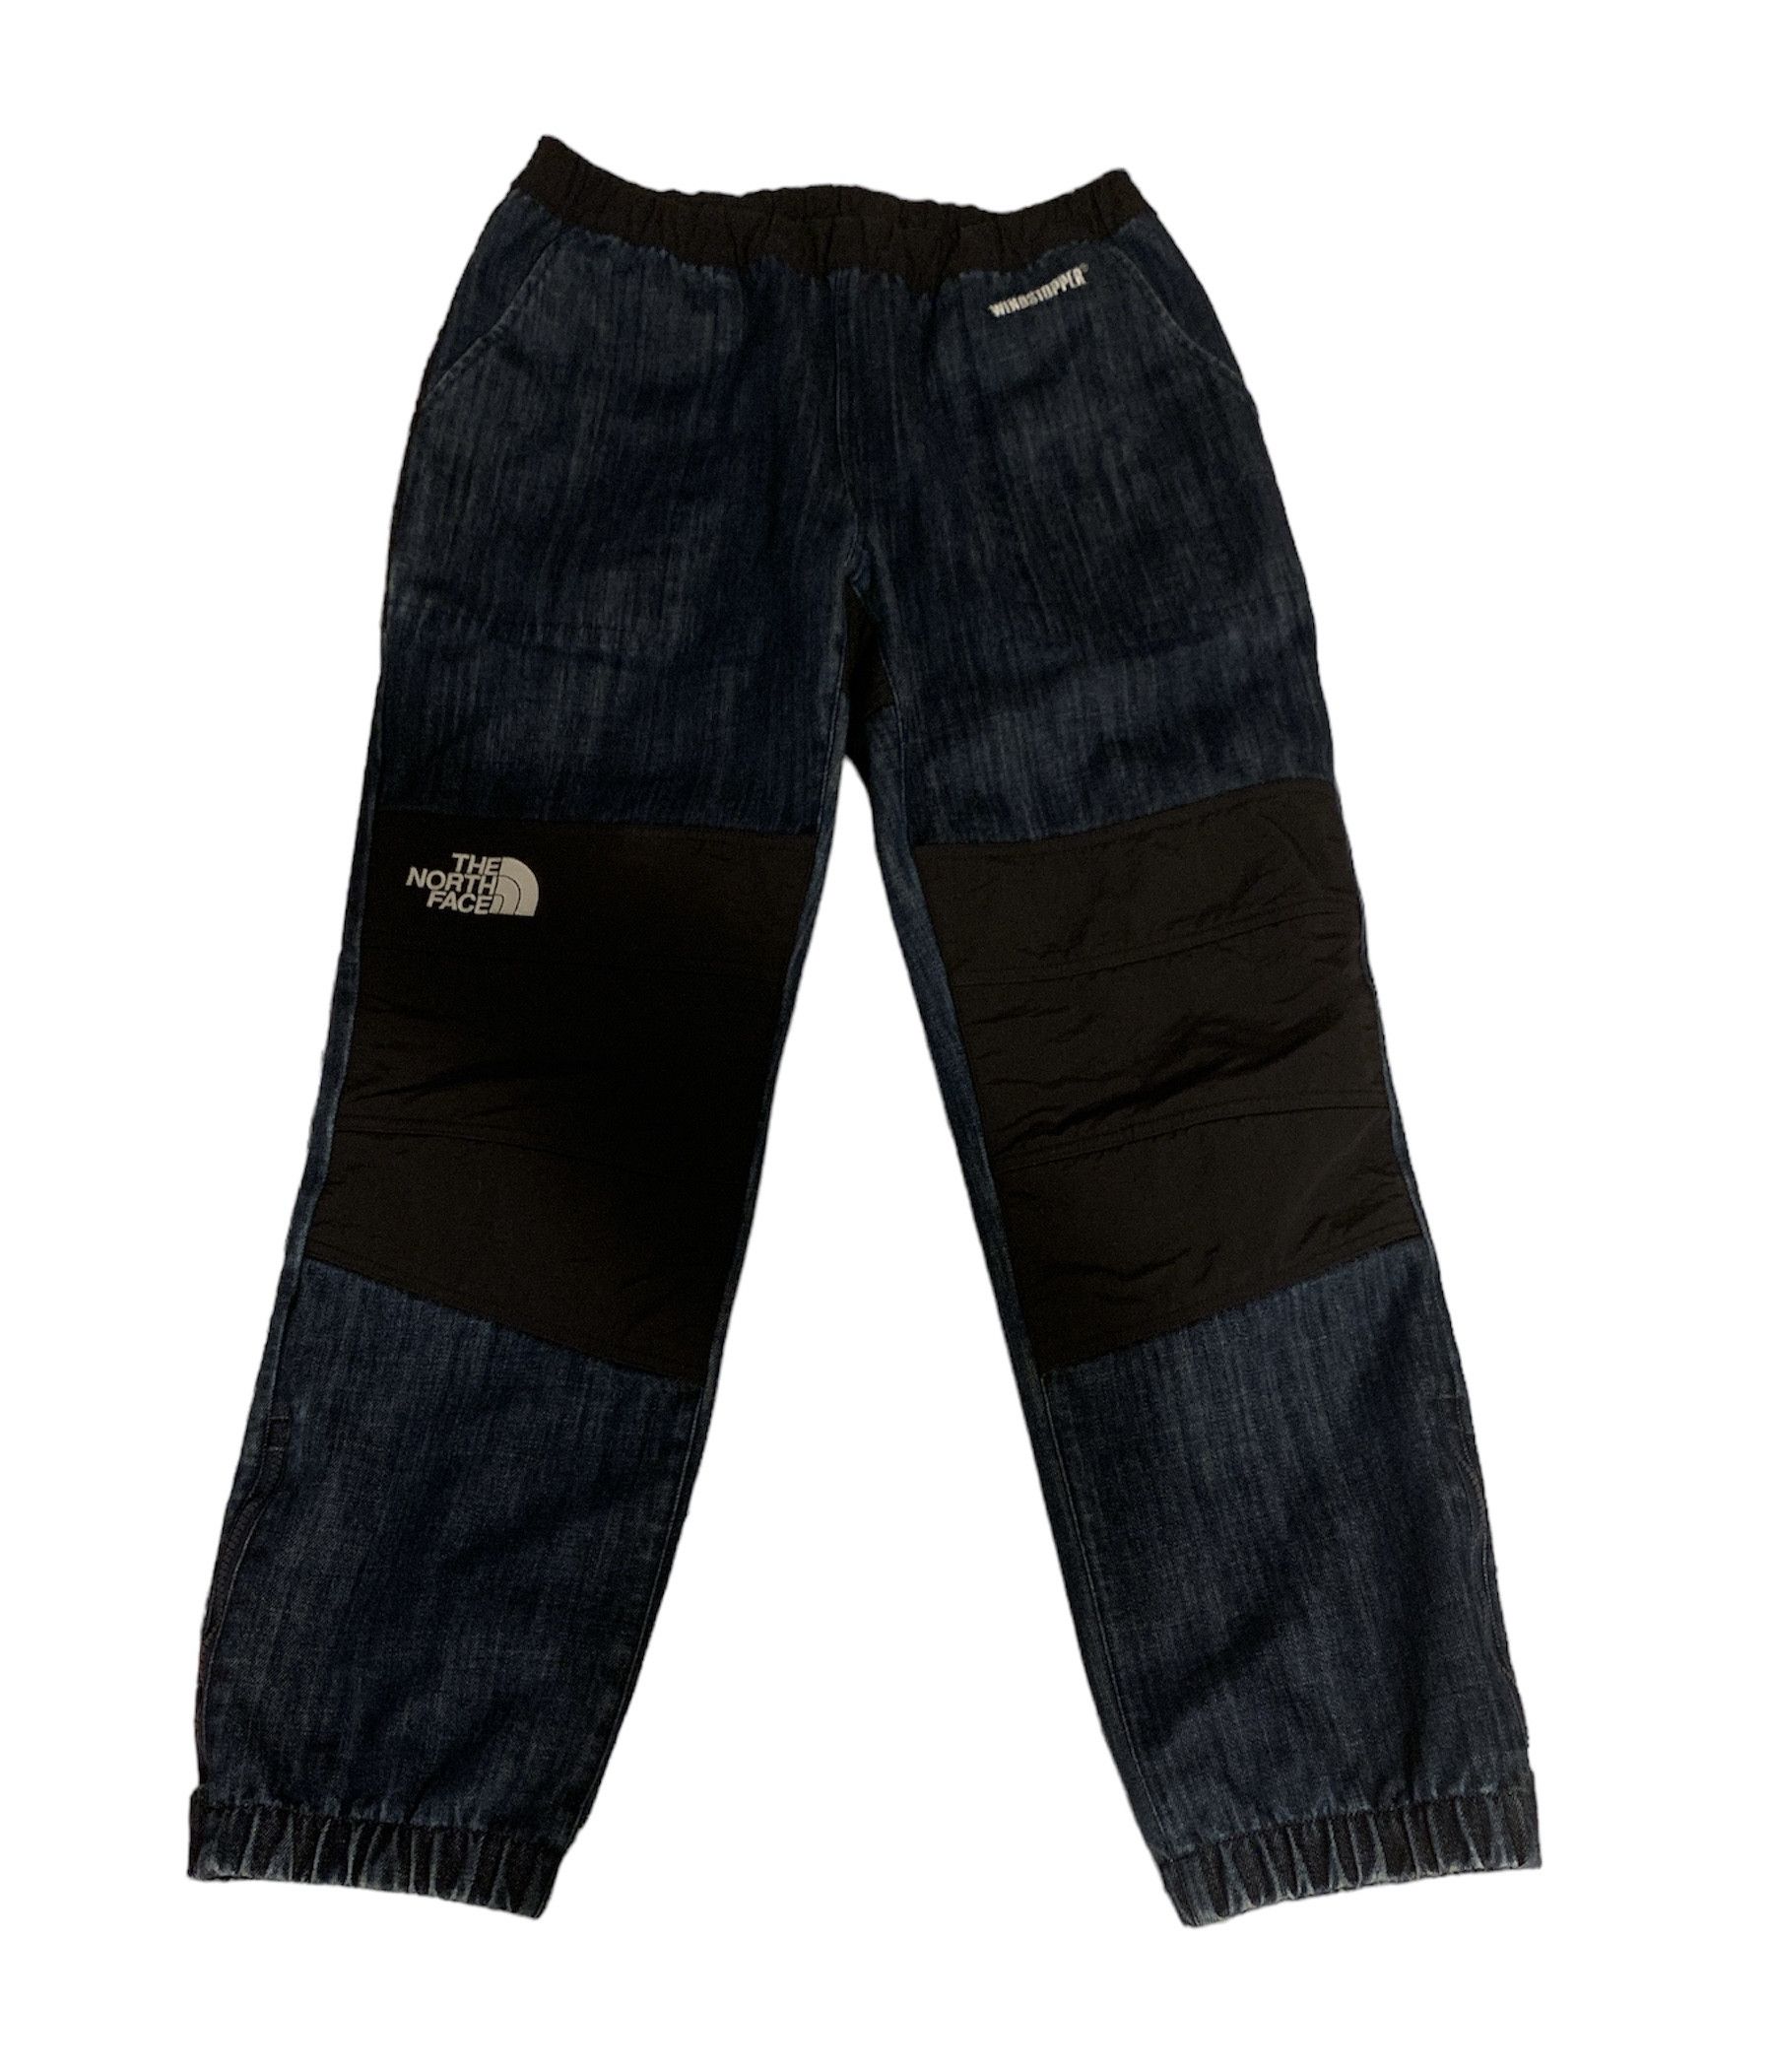 Supreme Supreme x The North Face Denali Denim Pants - Size Medium | Grailed